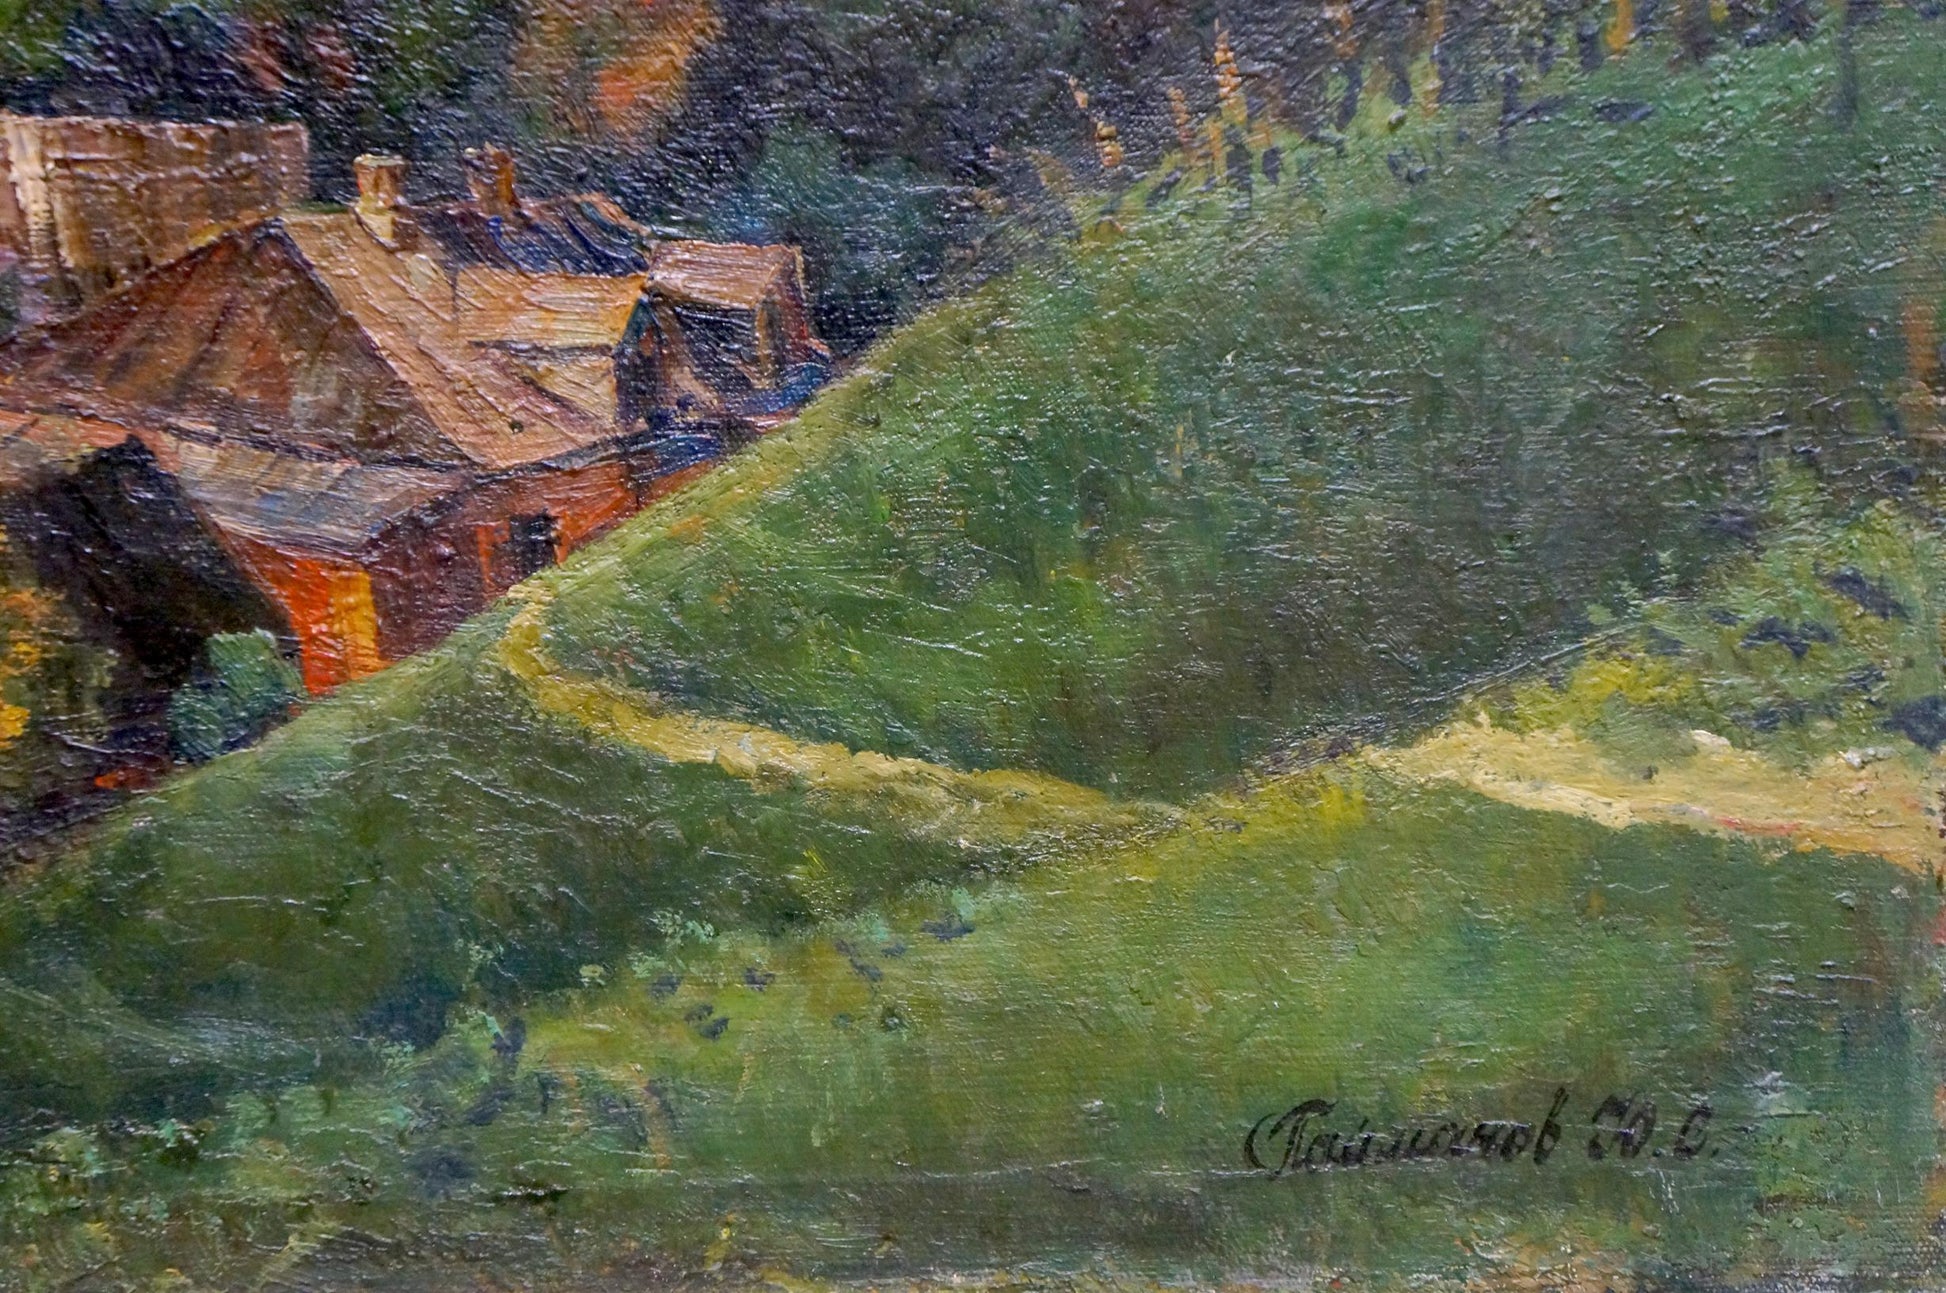 Poymanov's oil artwork, "Landscape," illustrating idyllic outdoor scenery.